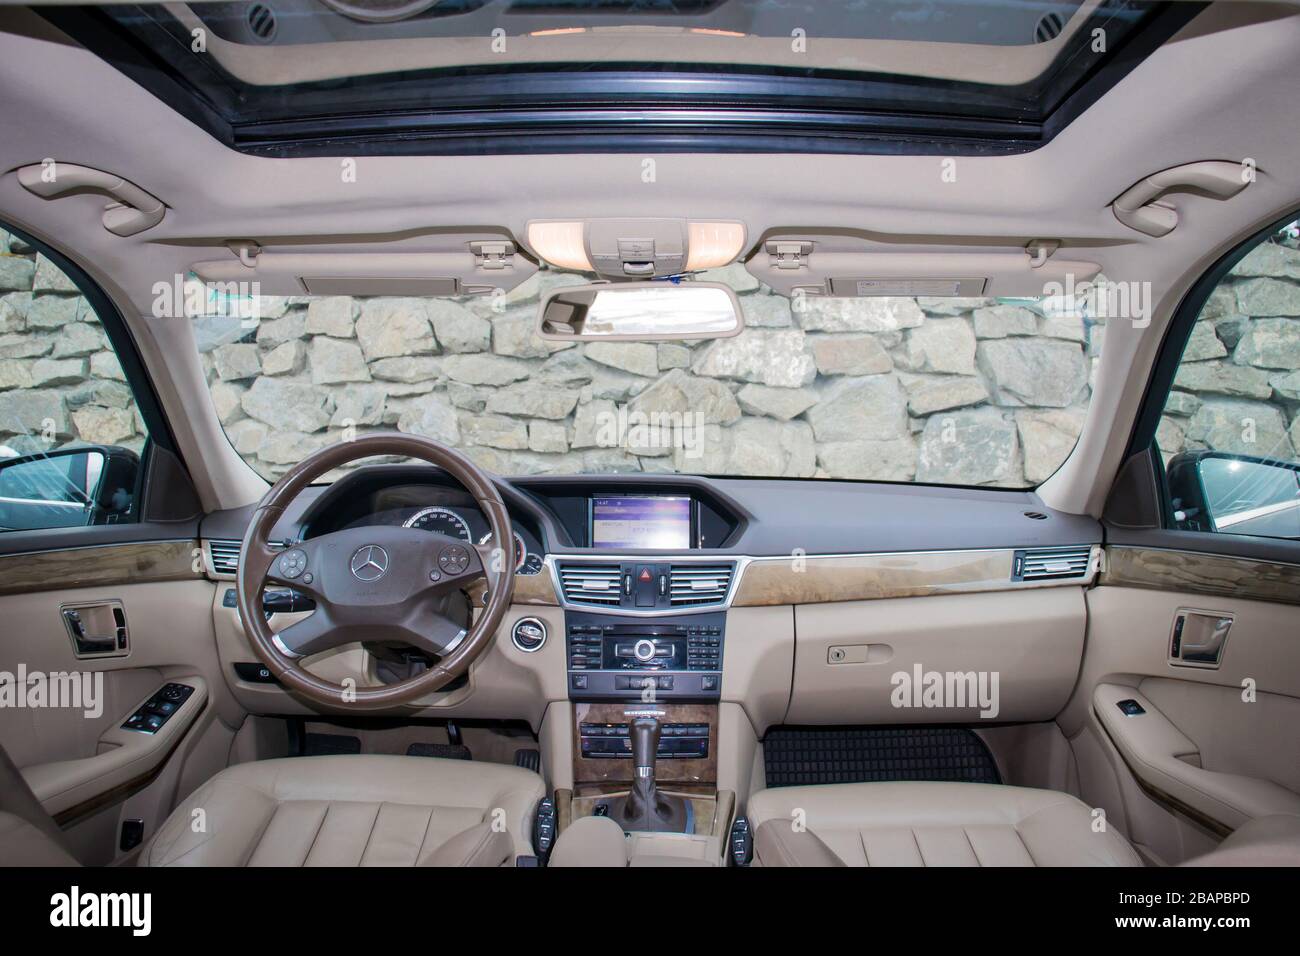 https://c8.alamy.com/comp/2BAPBPD/mercedes-benz-w212-year-2013-avantgarde-equipment-beige-leather-luxury-interior-e-class-250-cdi-custom-made-car-employee-manufactured-car-2BAPBPD.jpg